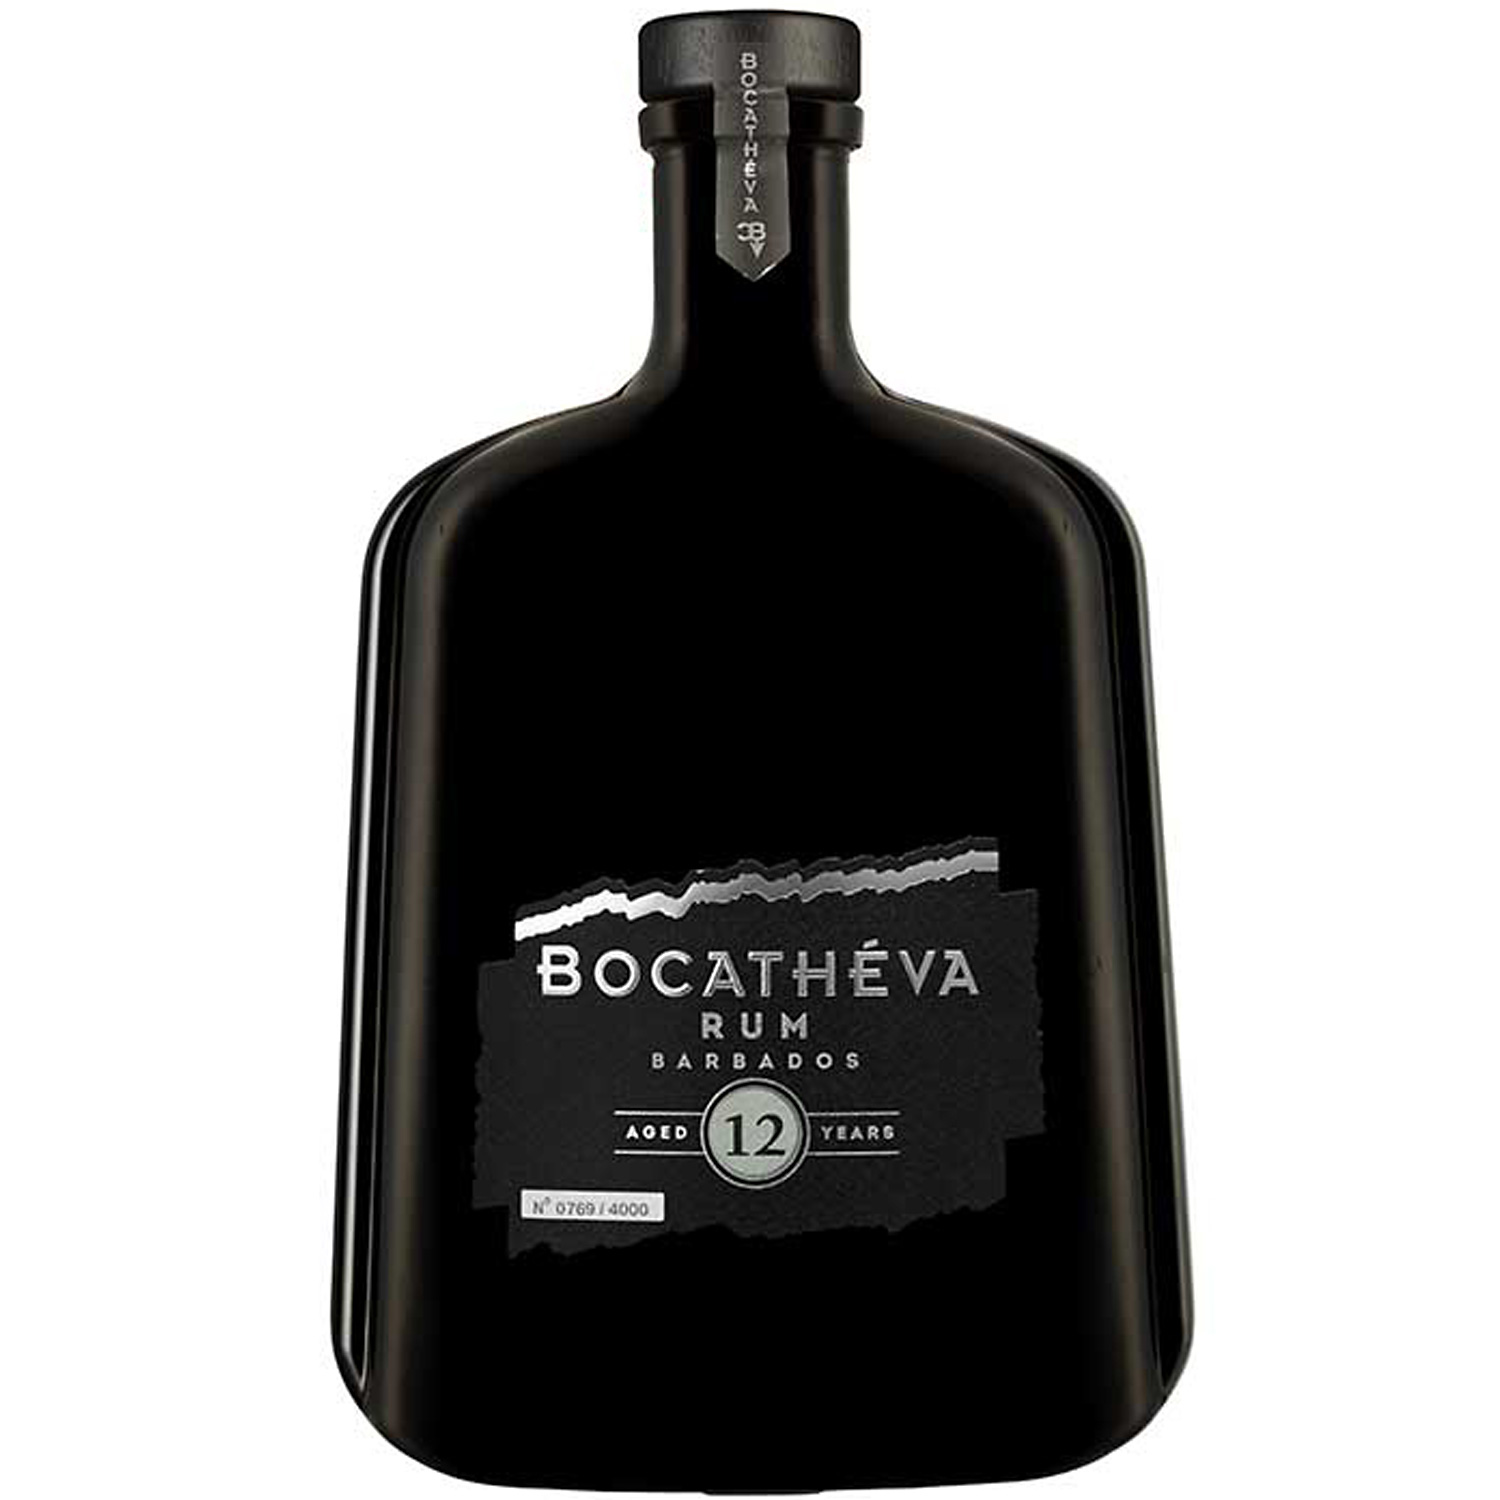 Bocatheva Barbados Rum 12 Jahre